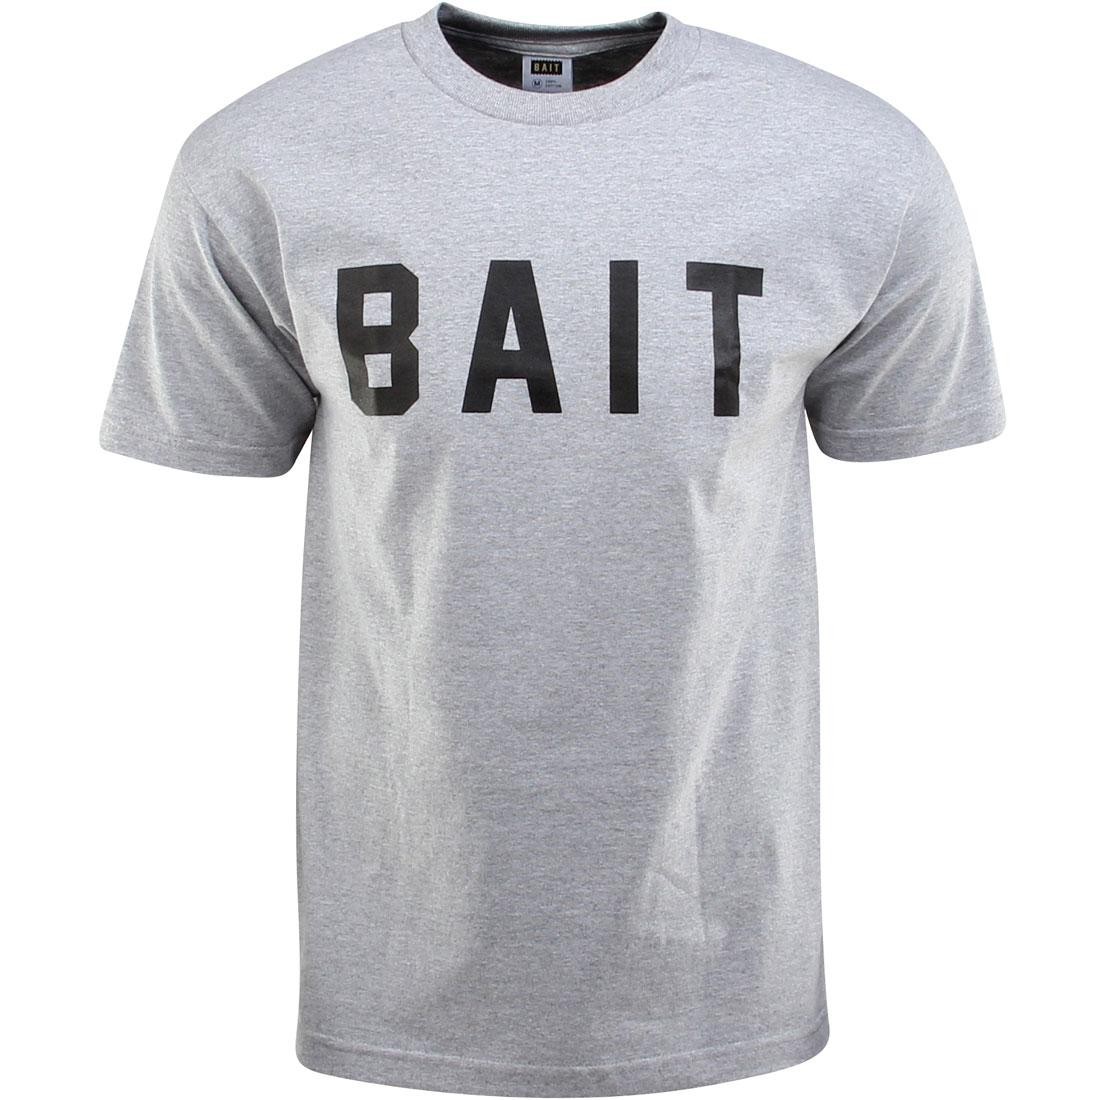 BAIT Logo Tee (gray / heather gray / black)